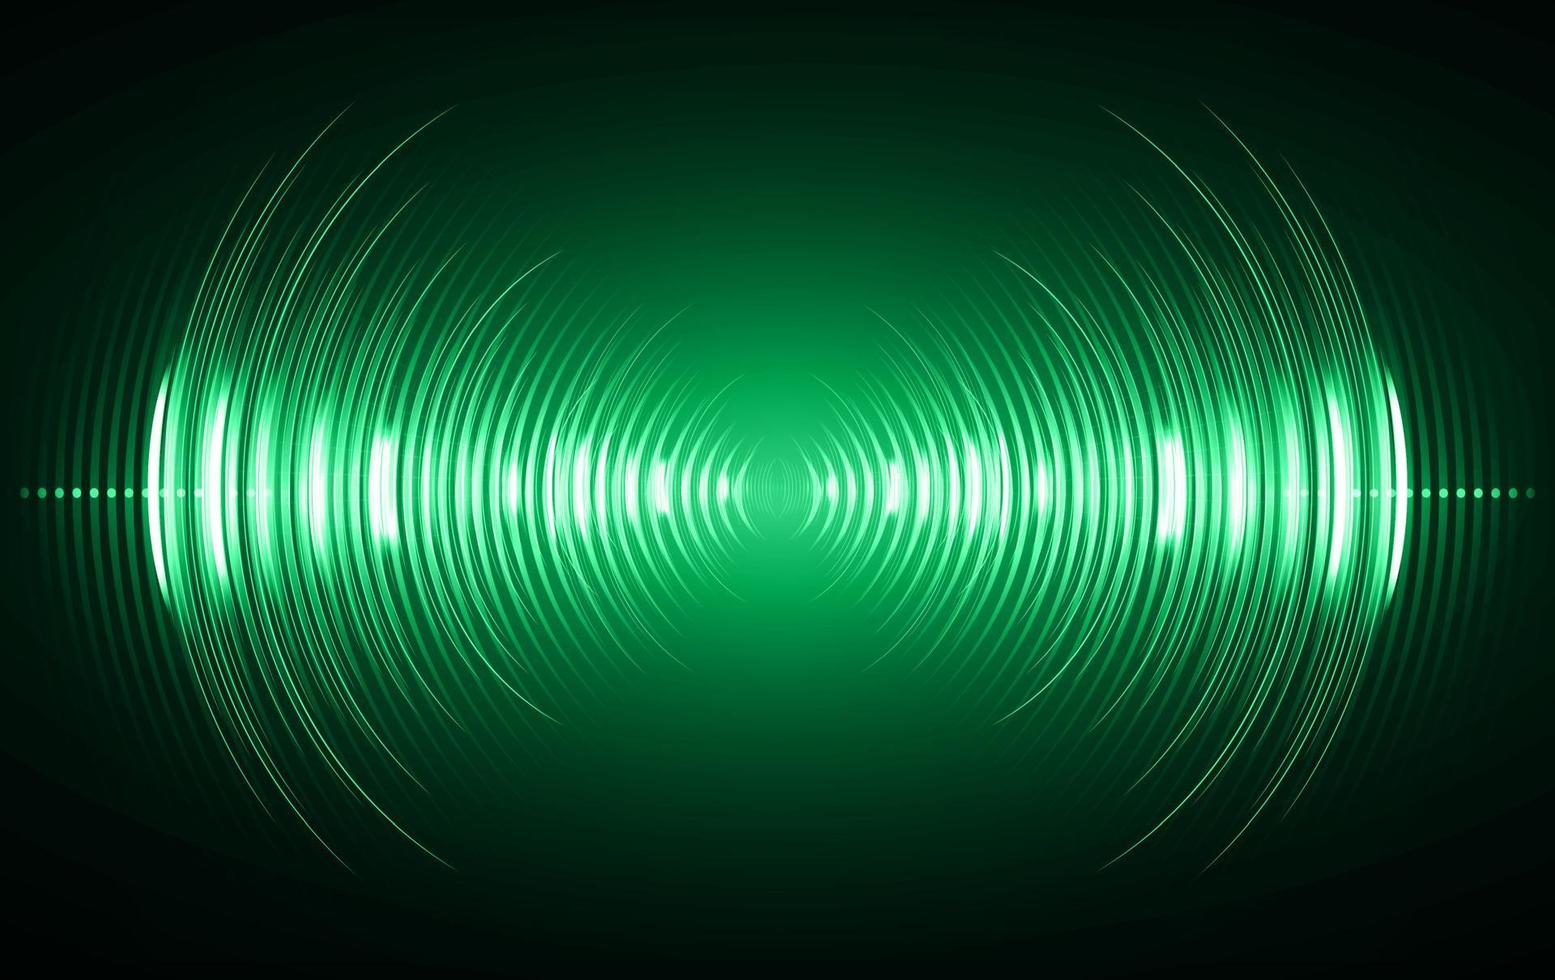 geluidsgolven die donker licht oscilleren vector